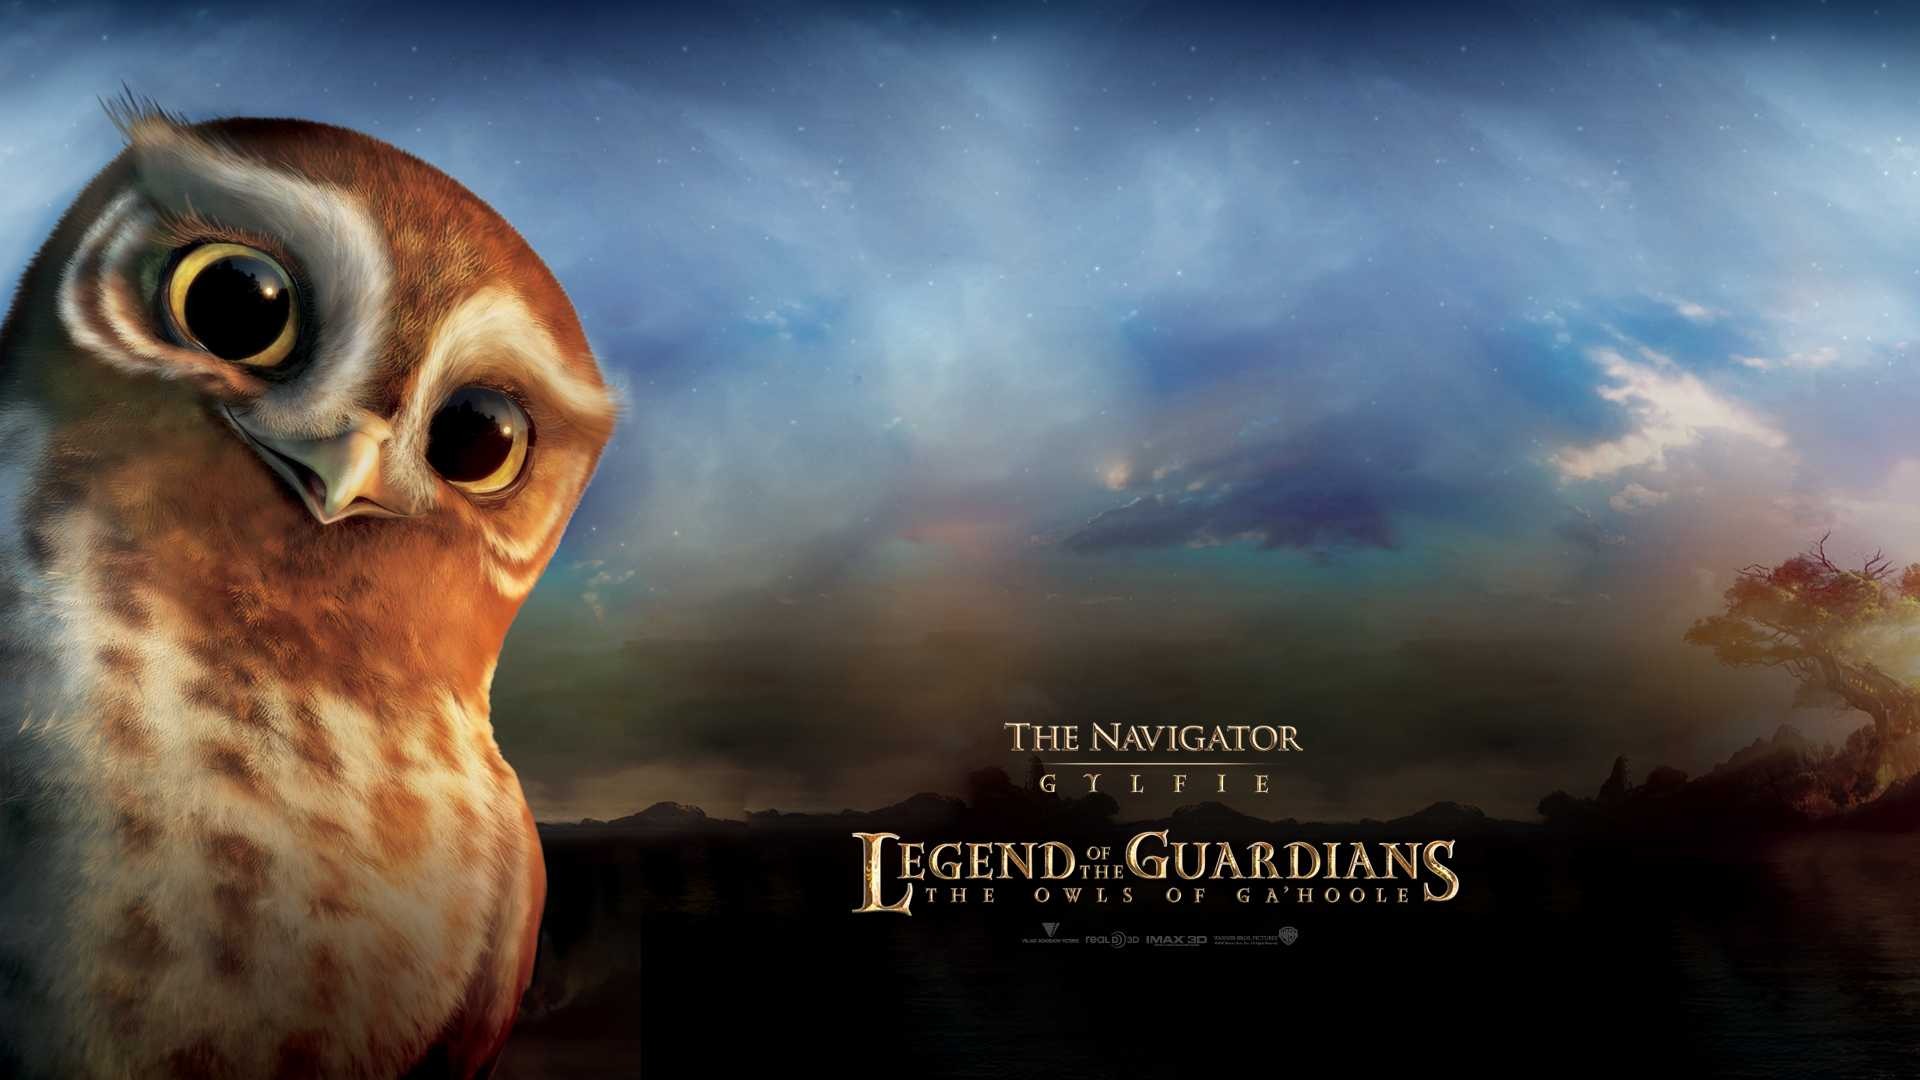 Legend of the Guardians: The Owls of Ga'Hoole 守卫者传奇(一)11 - 1920x1080